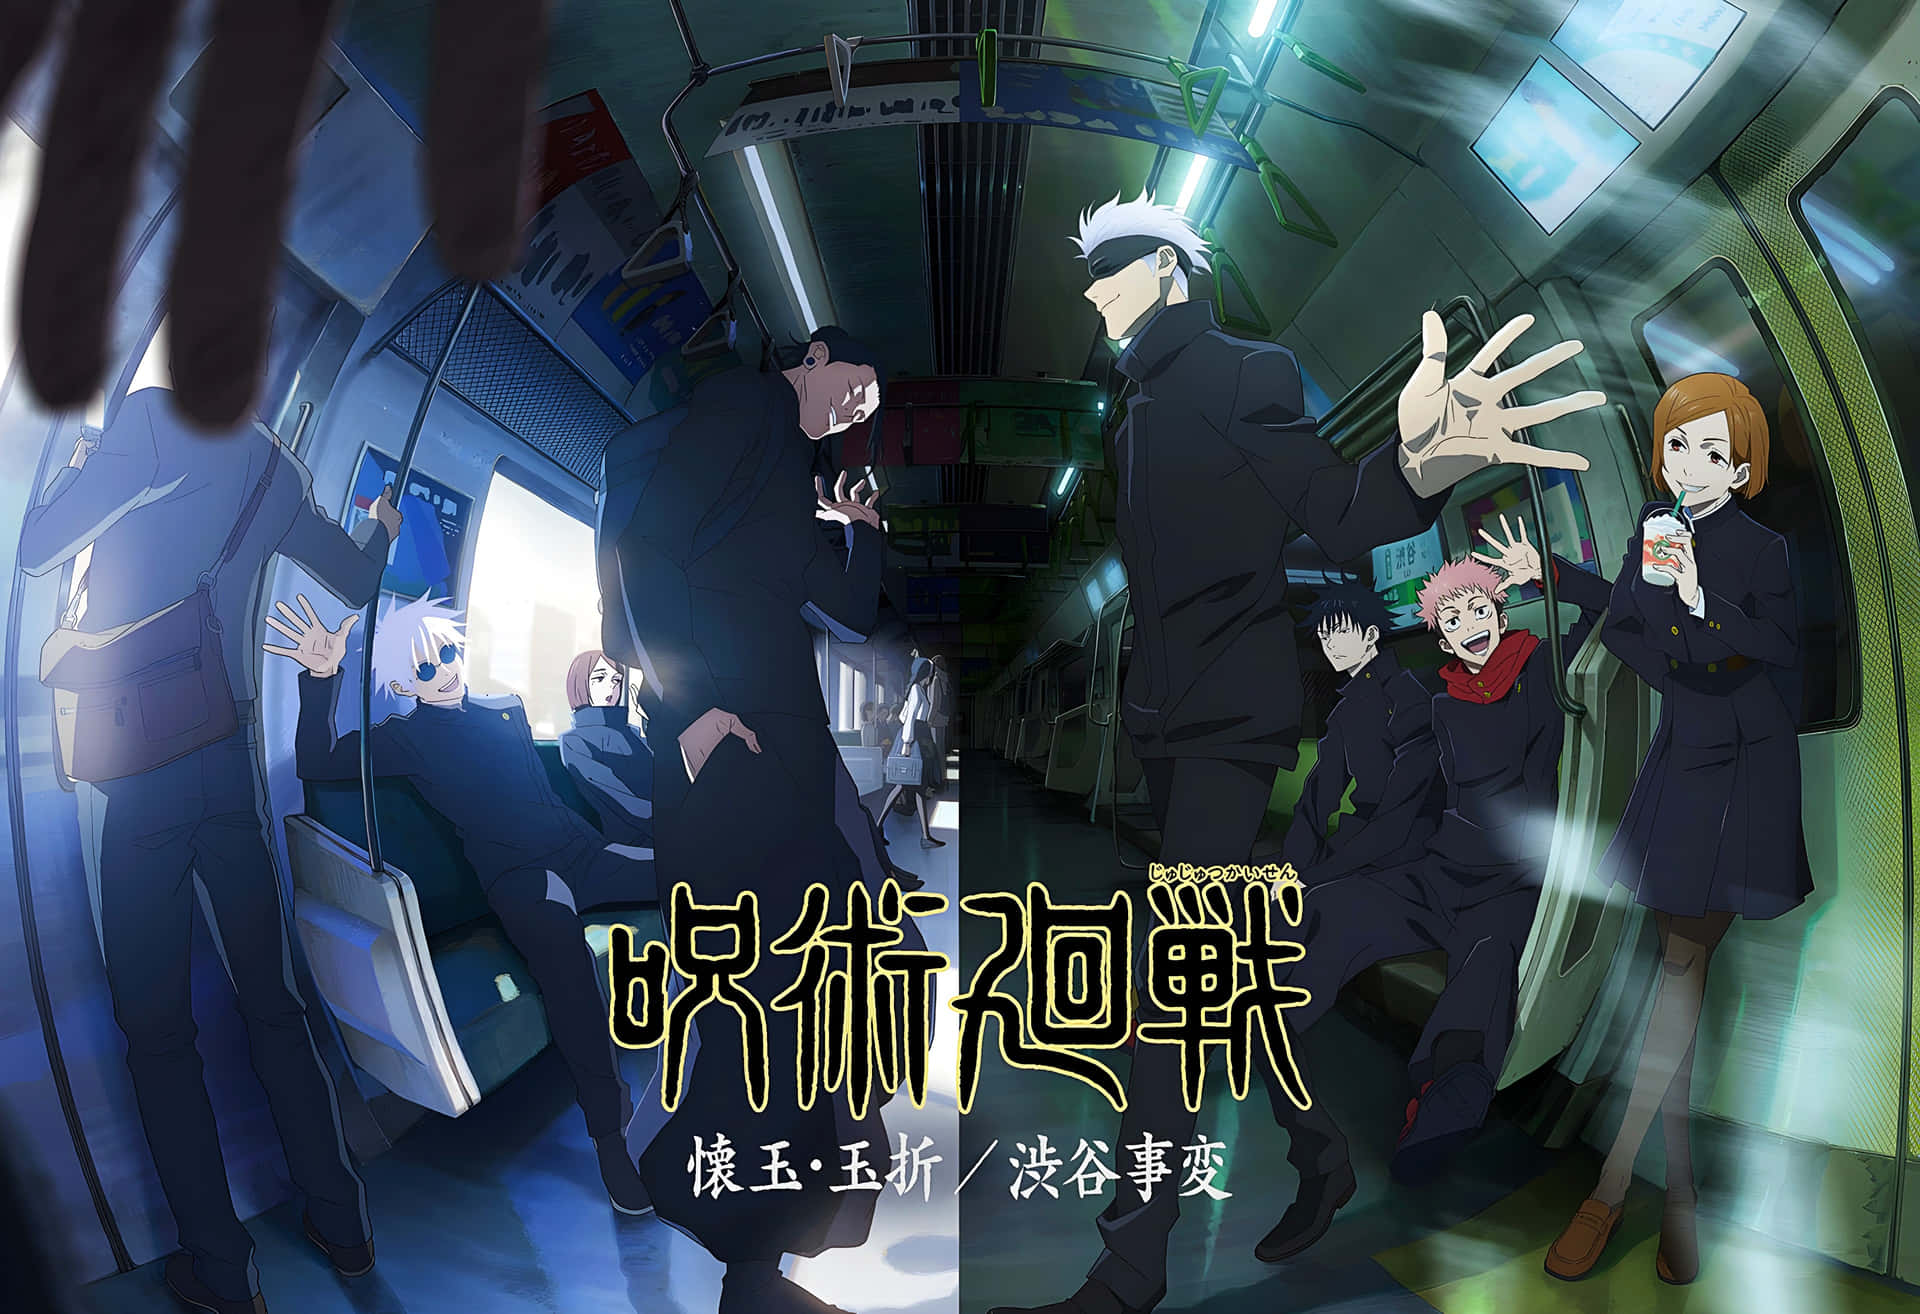 Gojoand Geto Anime Subway Scene Wallpaper